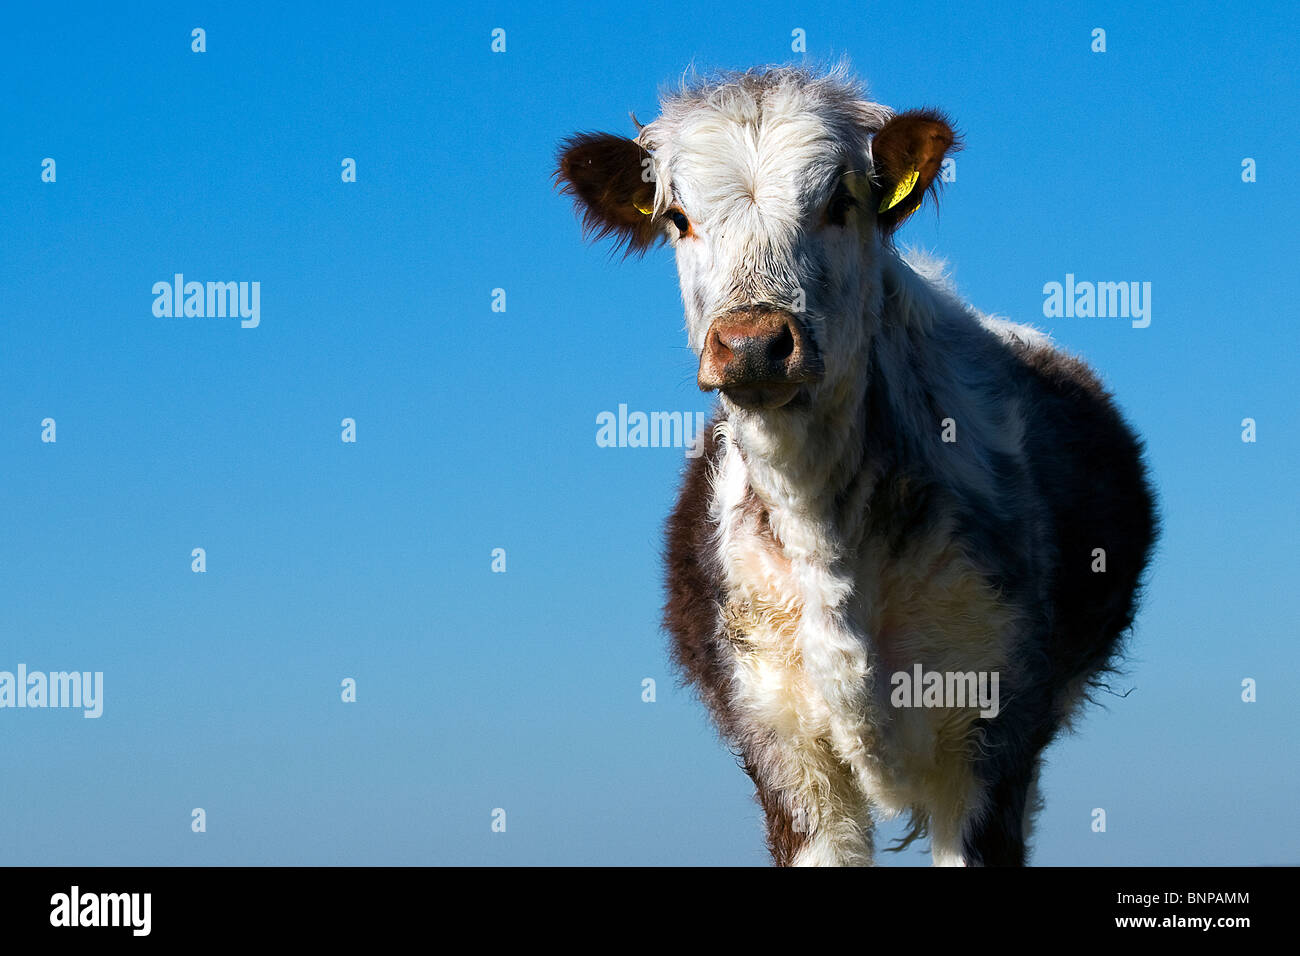 Short Long Horn Calf. Cute and Fluffy Baby Cow Farm Animal Stock Photo